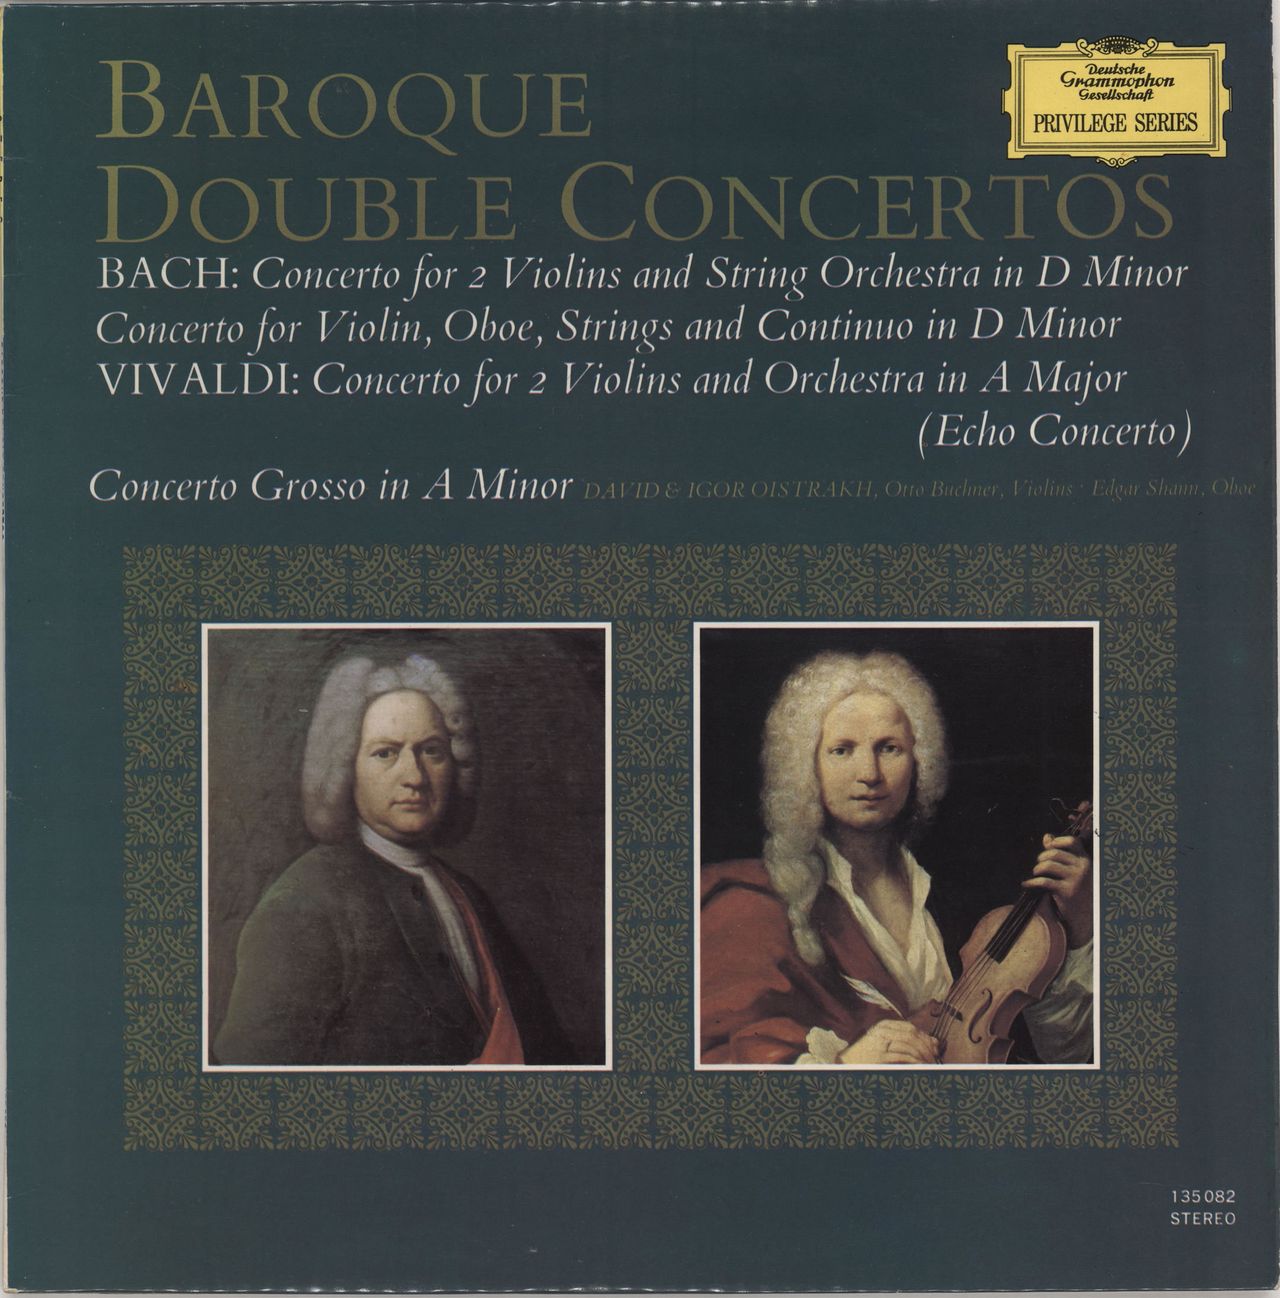 Various-Classical & Orchestral Baroque Double Concertos UK vinyl LP album (LP record) 135082